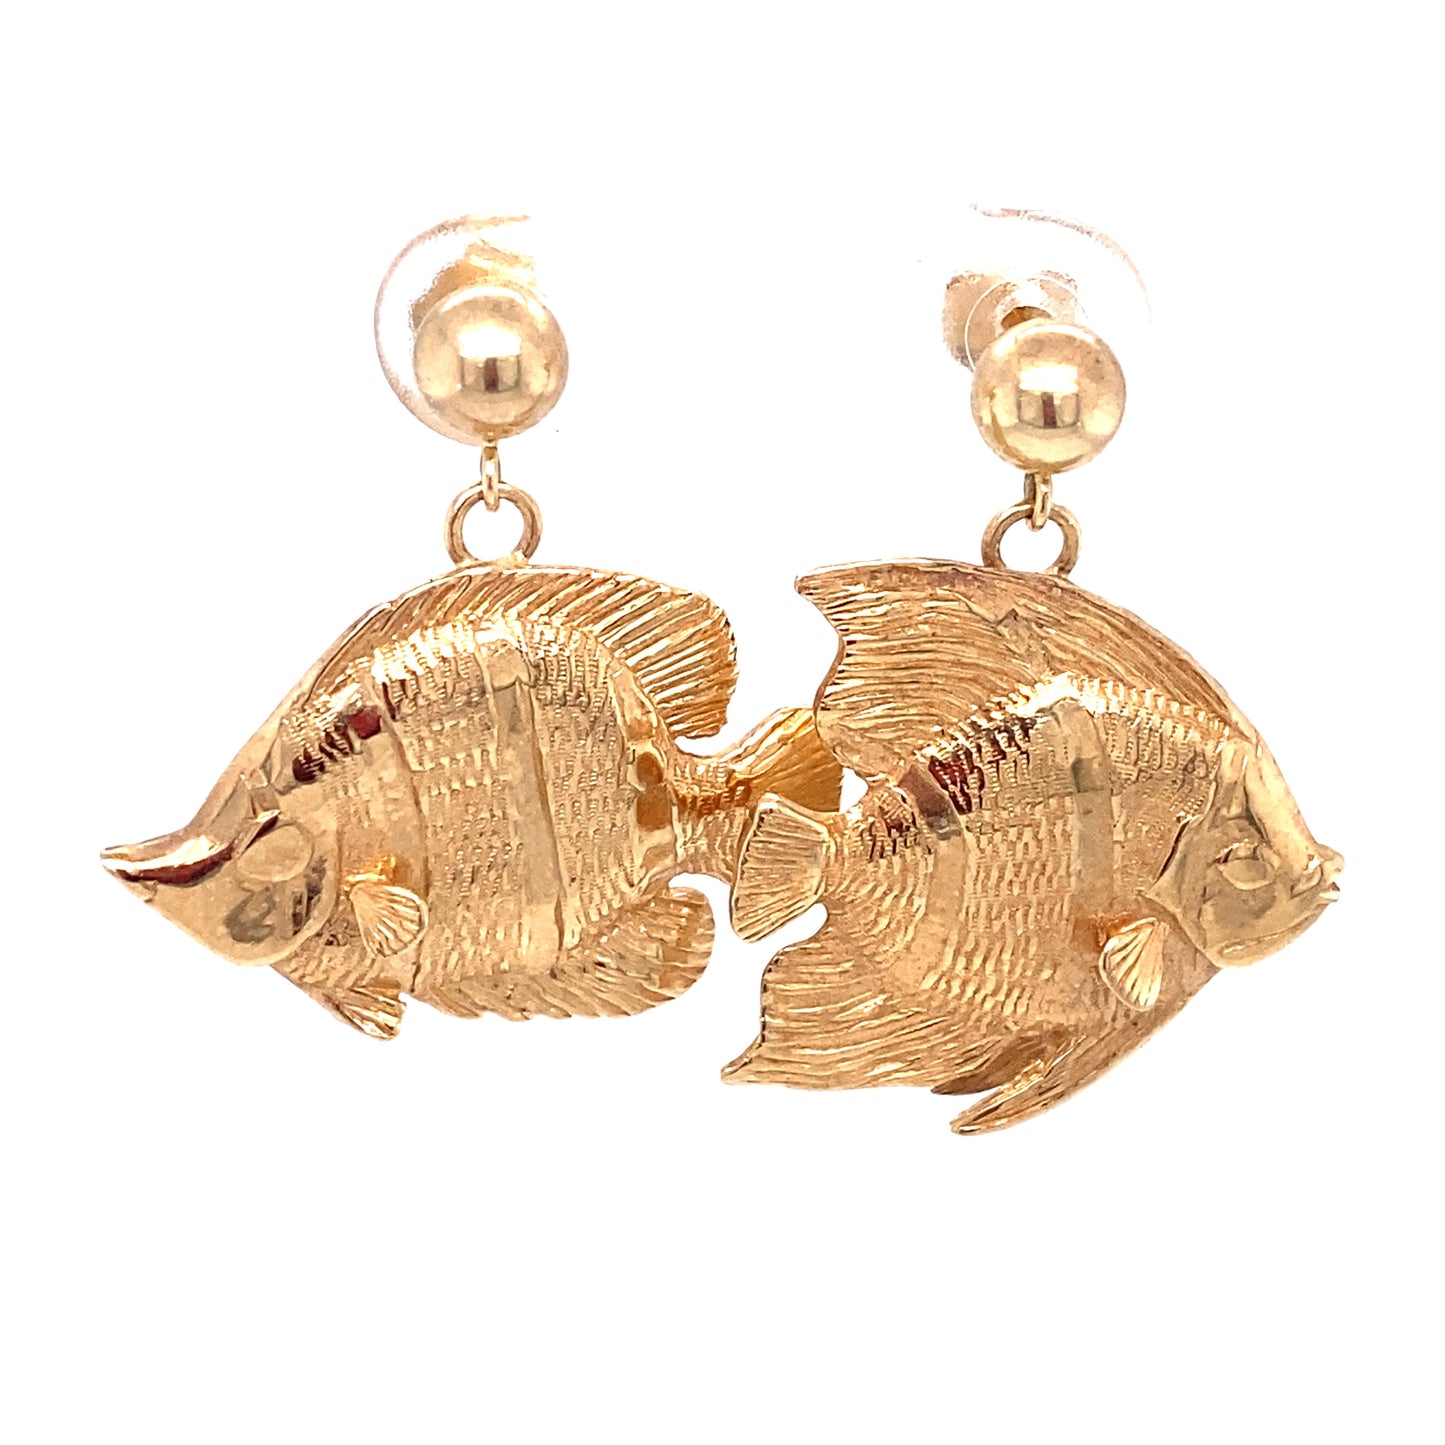 Circa 1950s Fish Dangle Earrings in 14K Gold